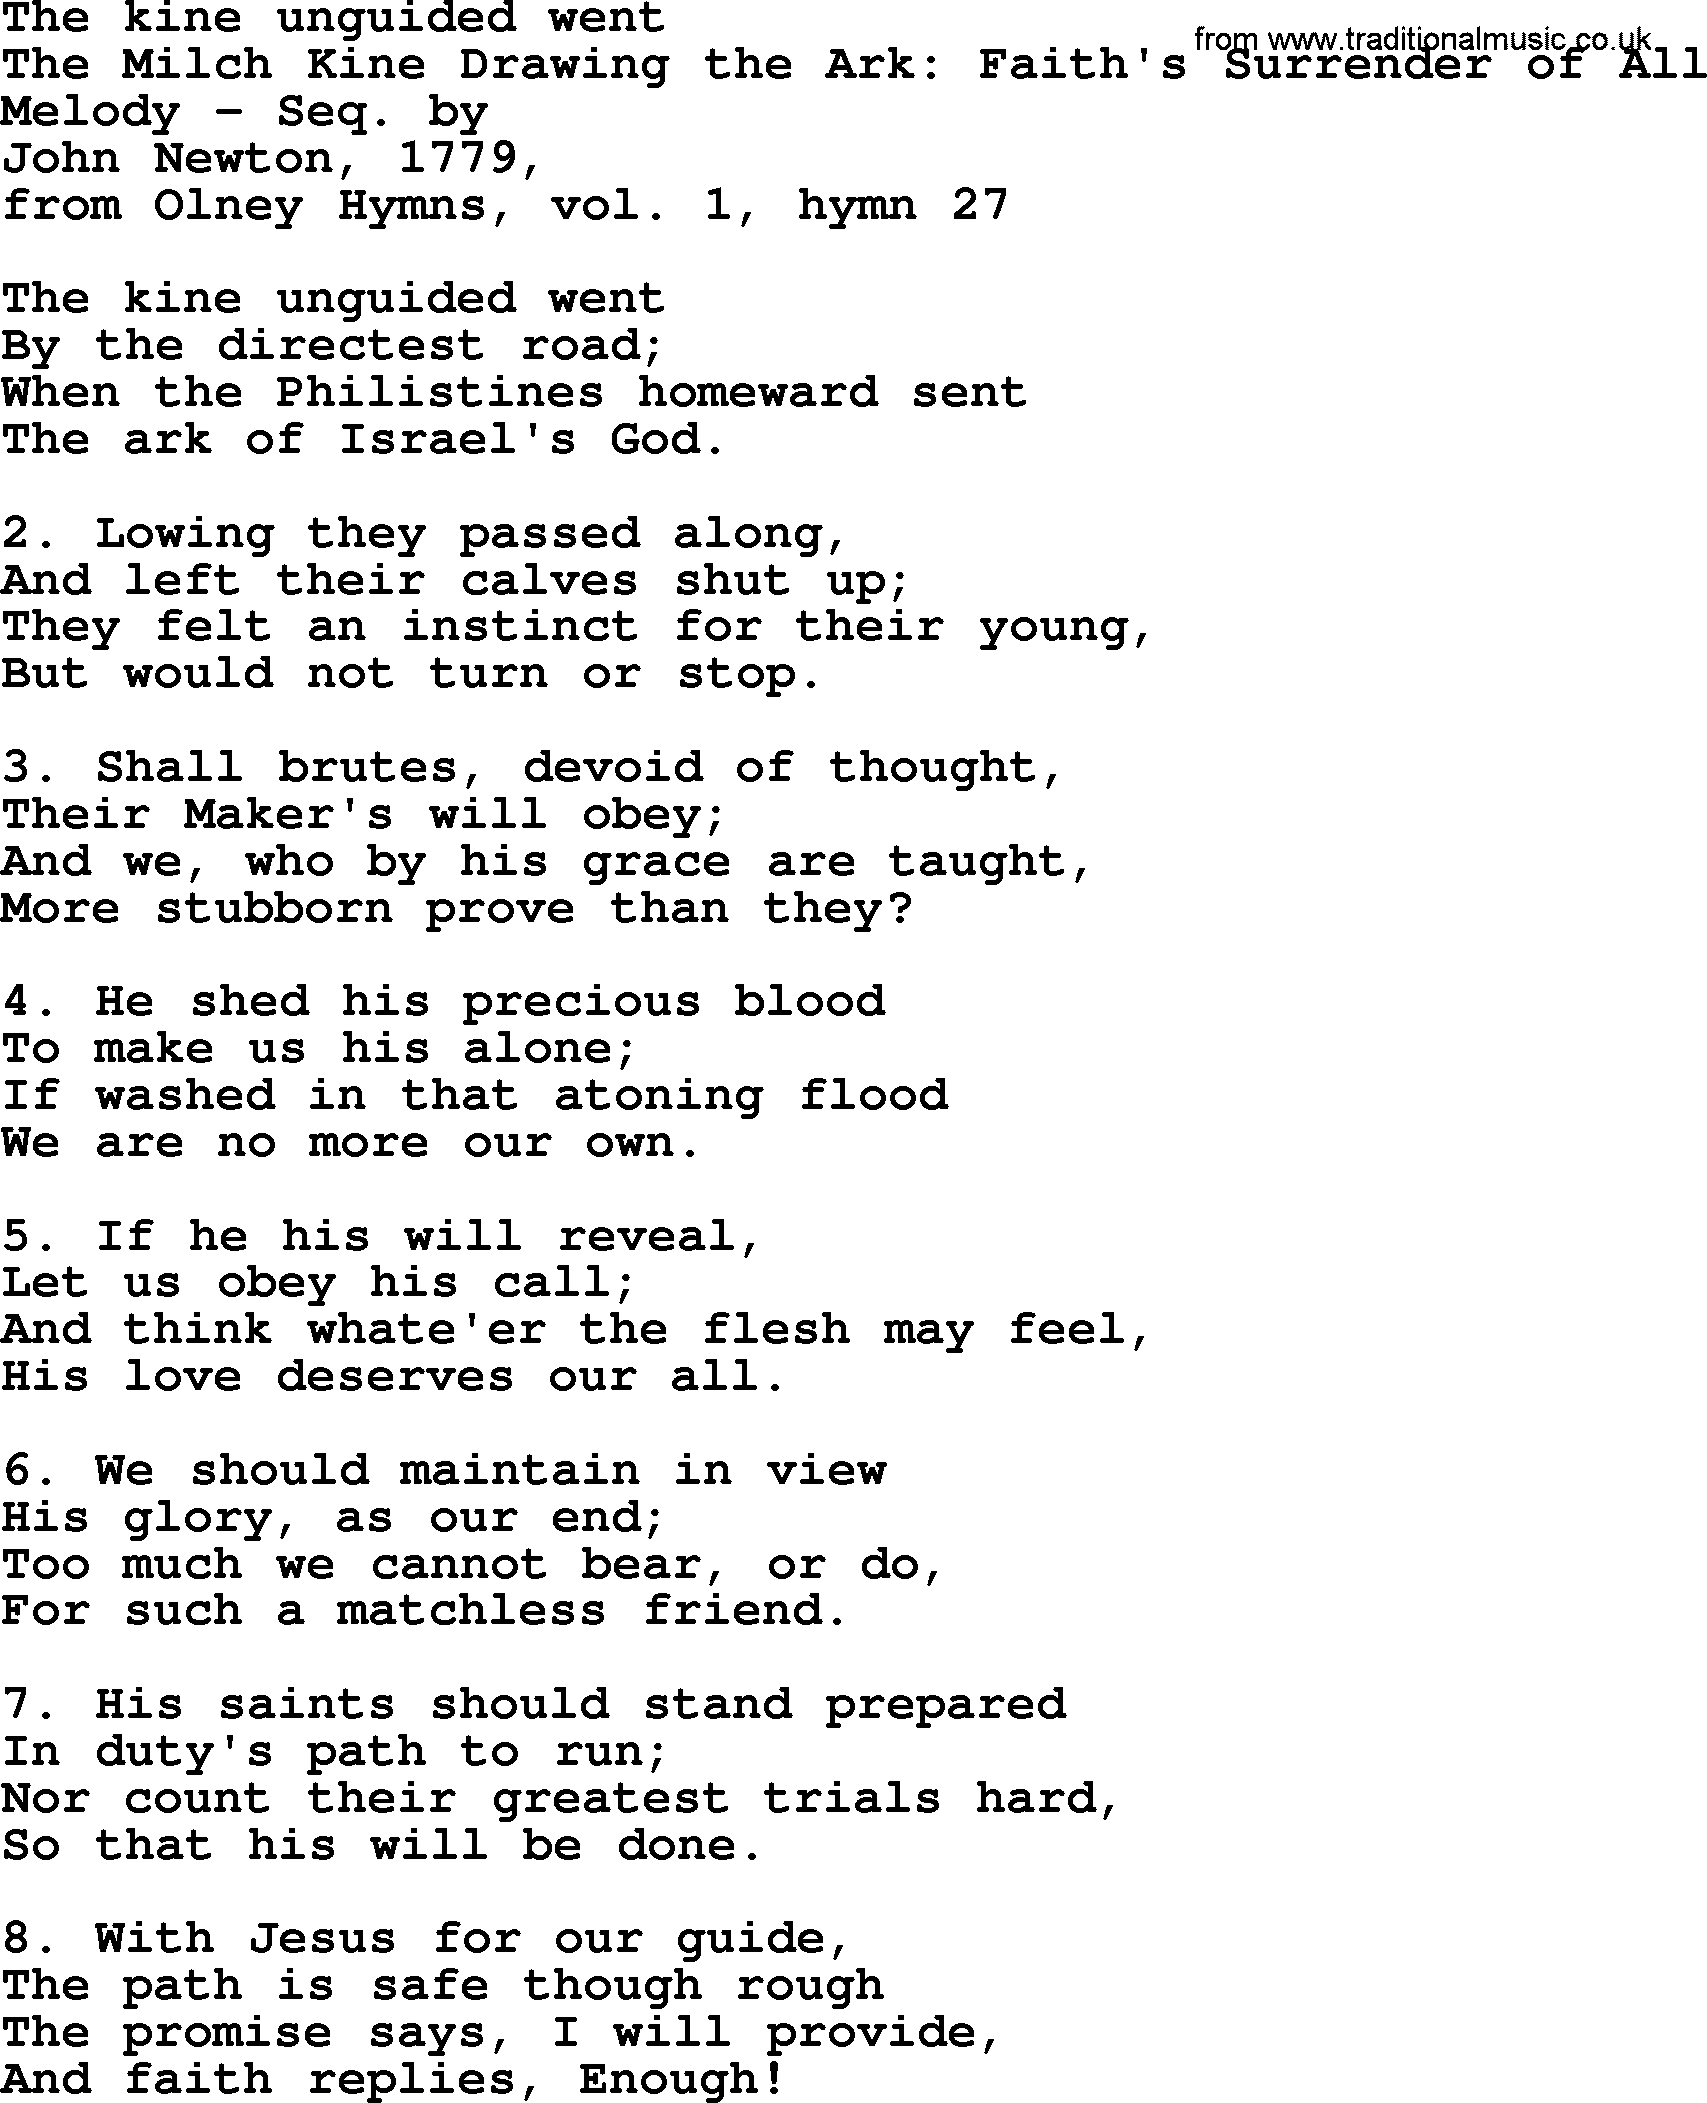 John Newton hymn: The Kine Unguided Went, lyrics